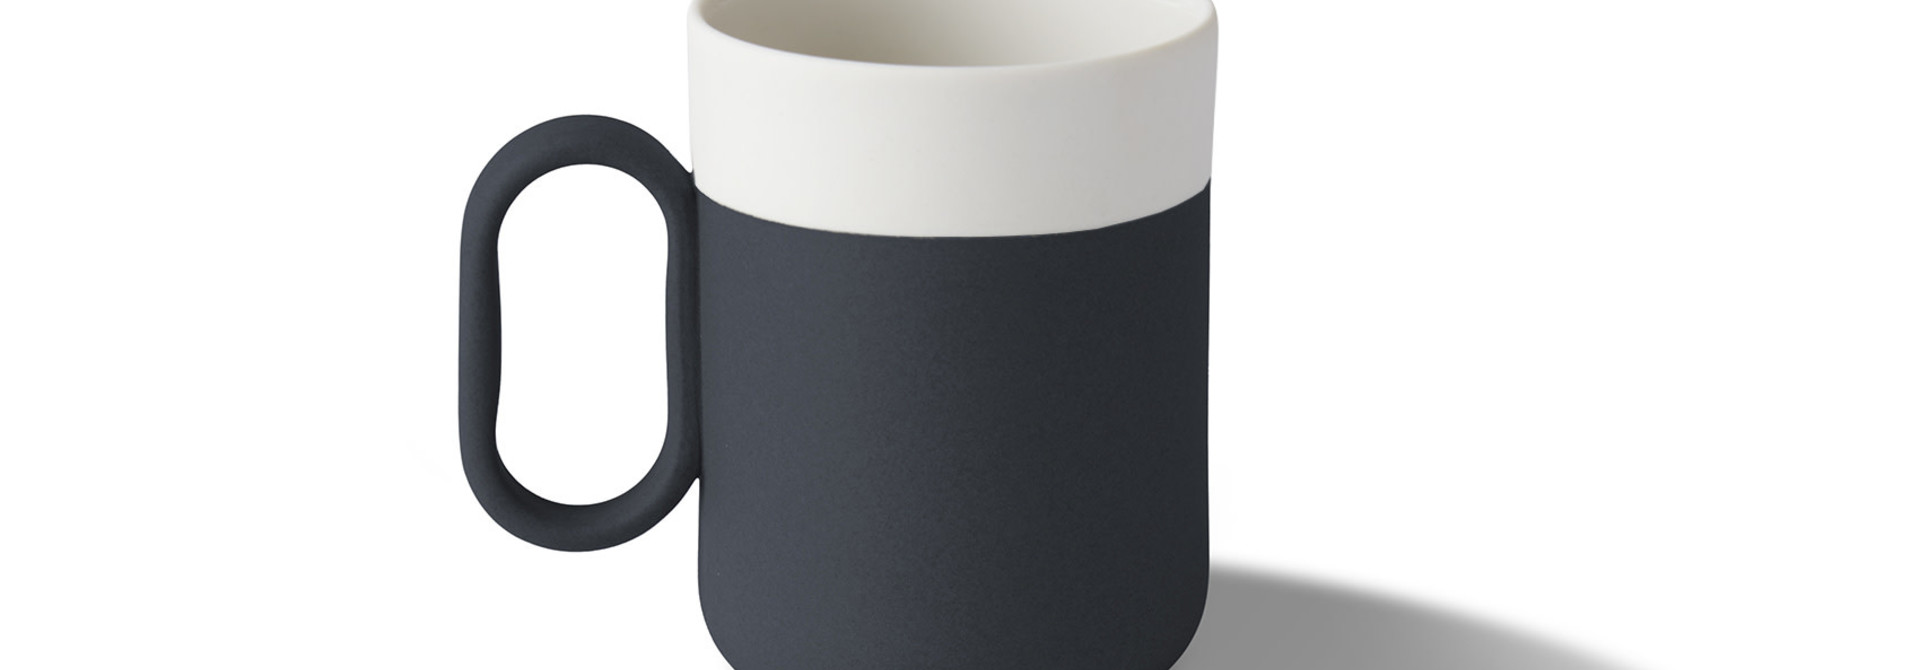 Capsule Espresso Cup Porcelain - Black&Ivory- Esma Dereboy 5x5x6.5cm